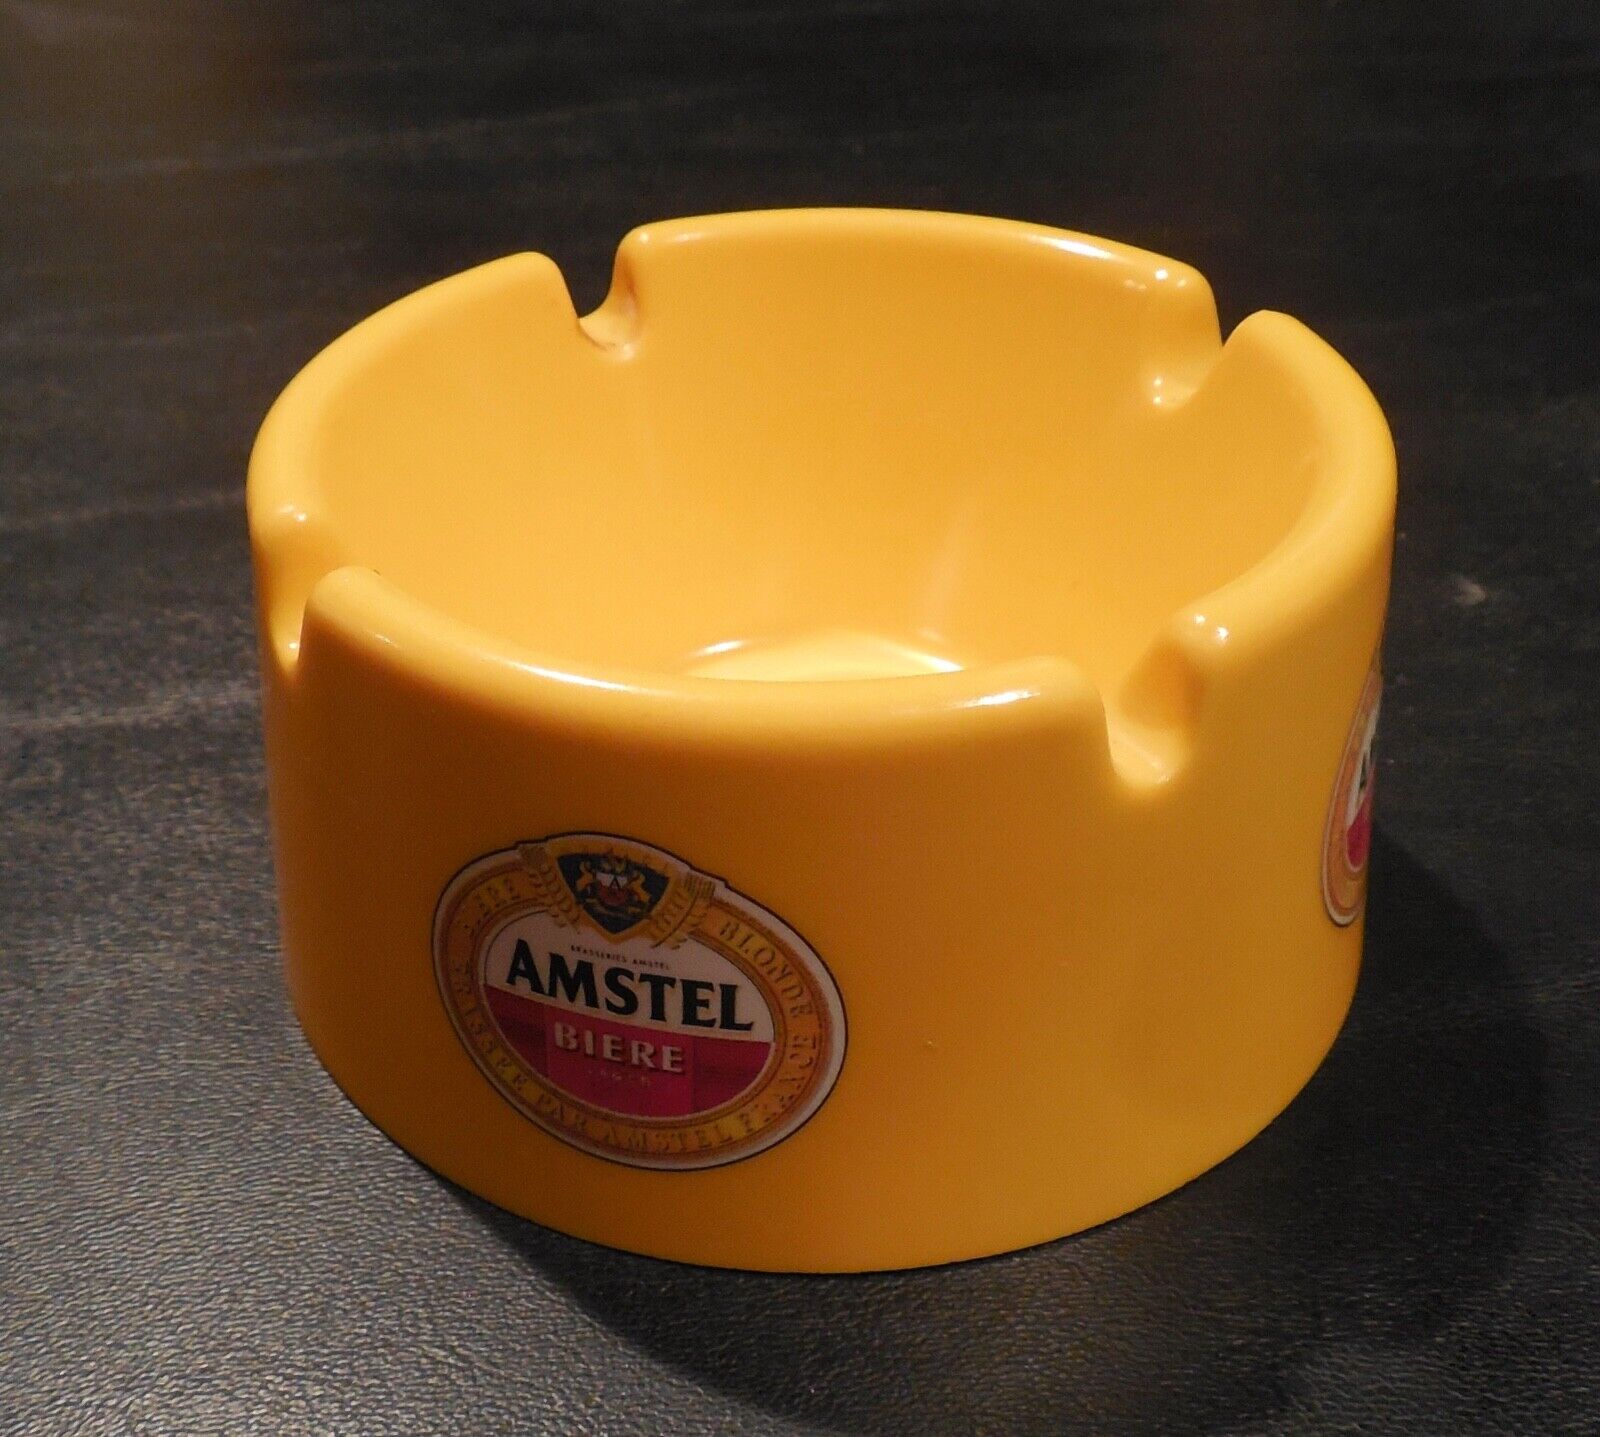 Amstel Beer ashtray, gold